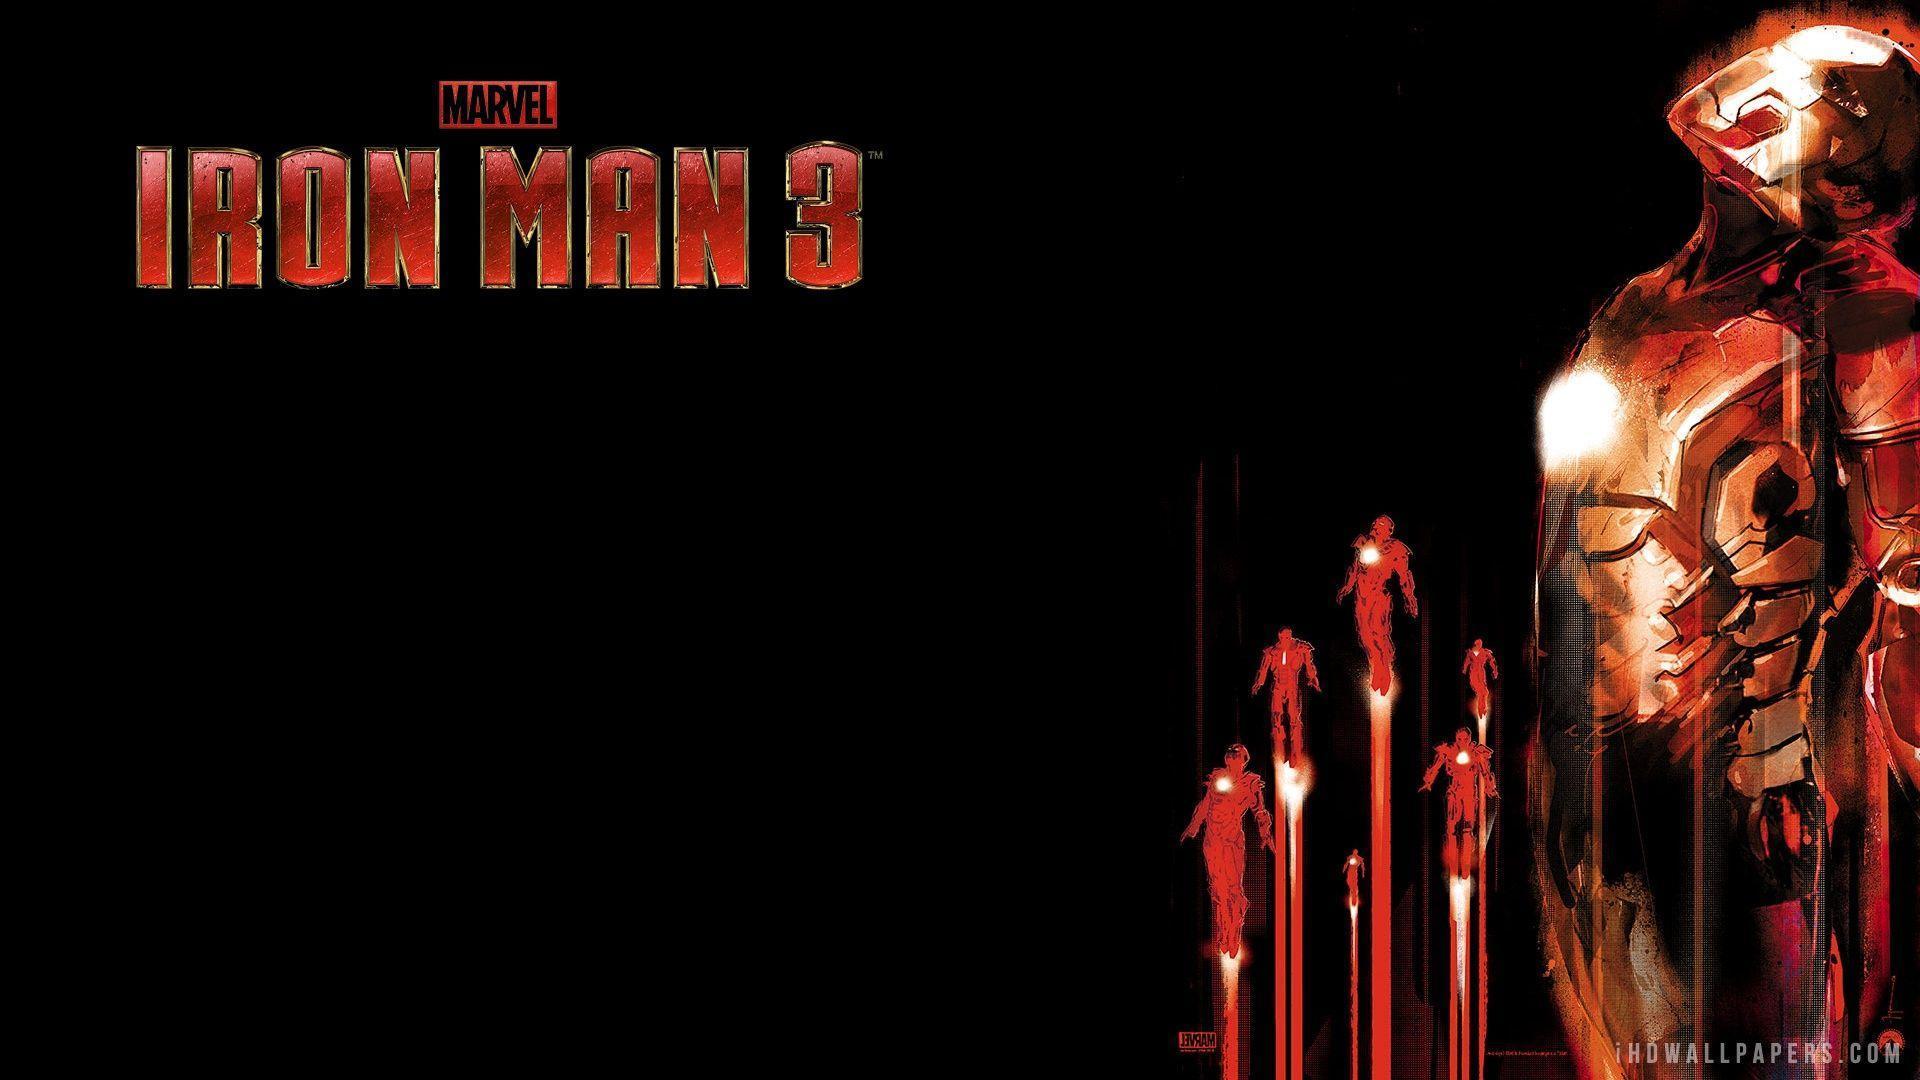 Iron Man 3 IMAX 3D HD 1080p Wallpaper. Iron